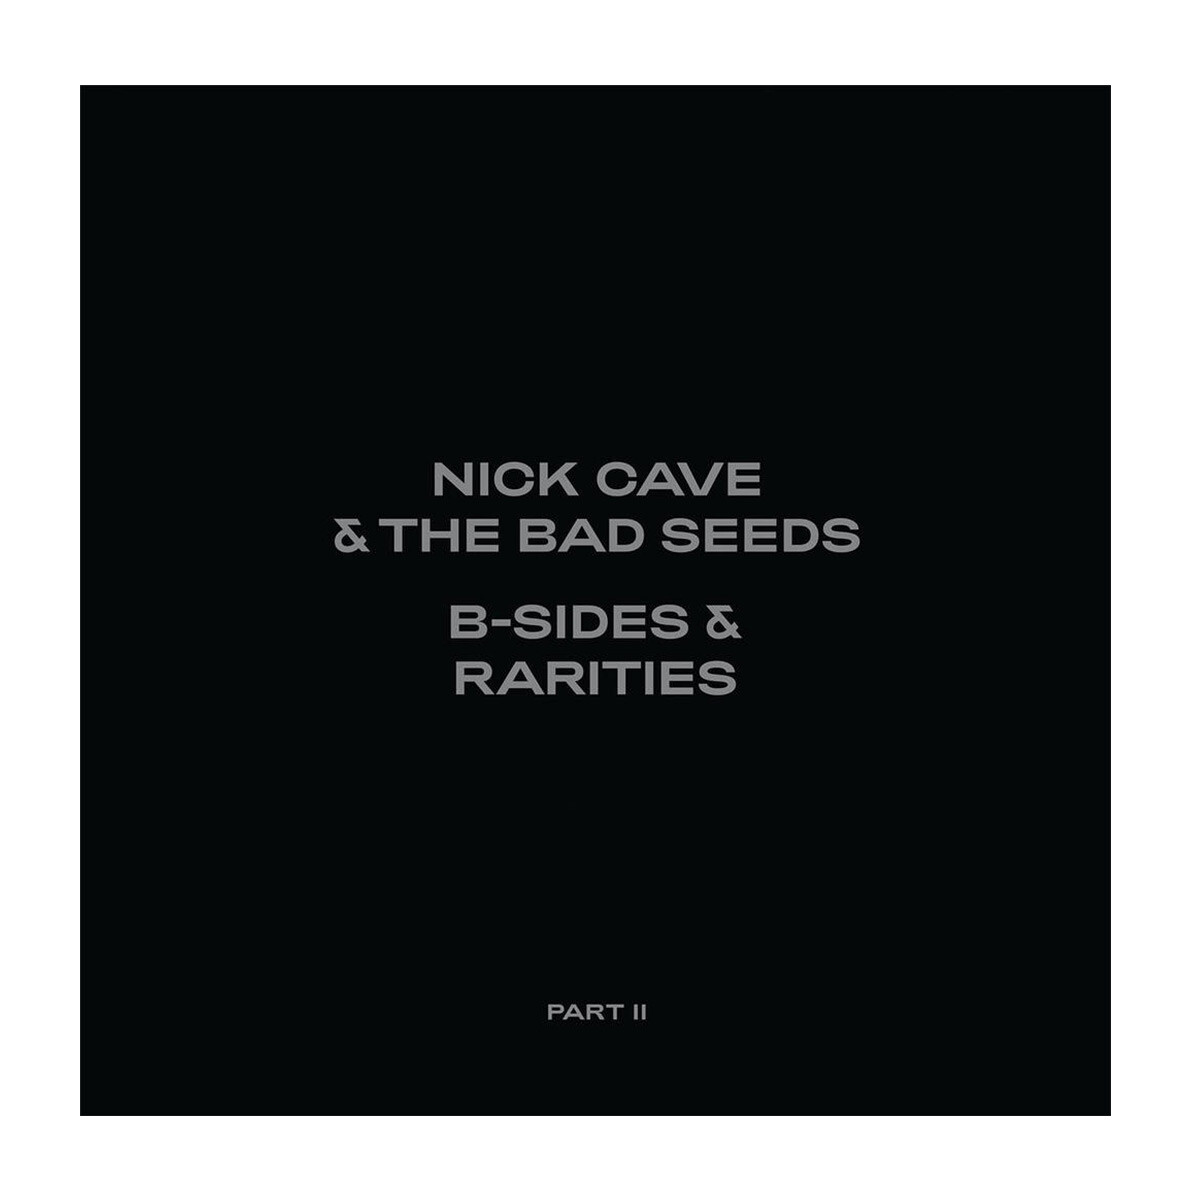 Cave, Nick & Bad Seeds - B-sides & Rarities (part Ii) - Vinilo 